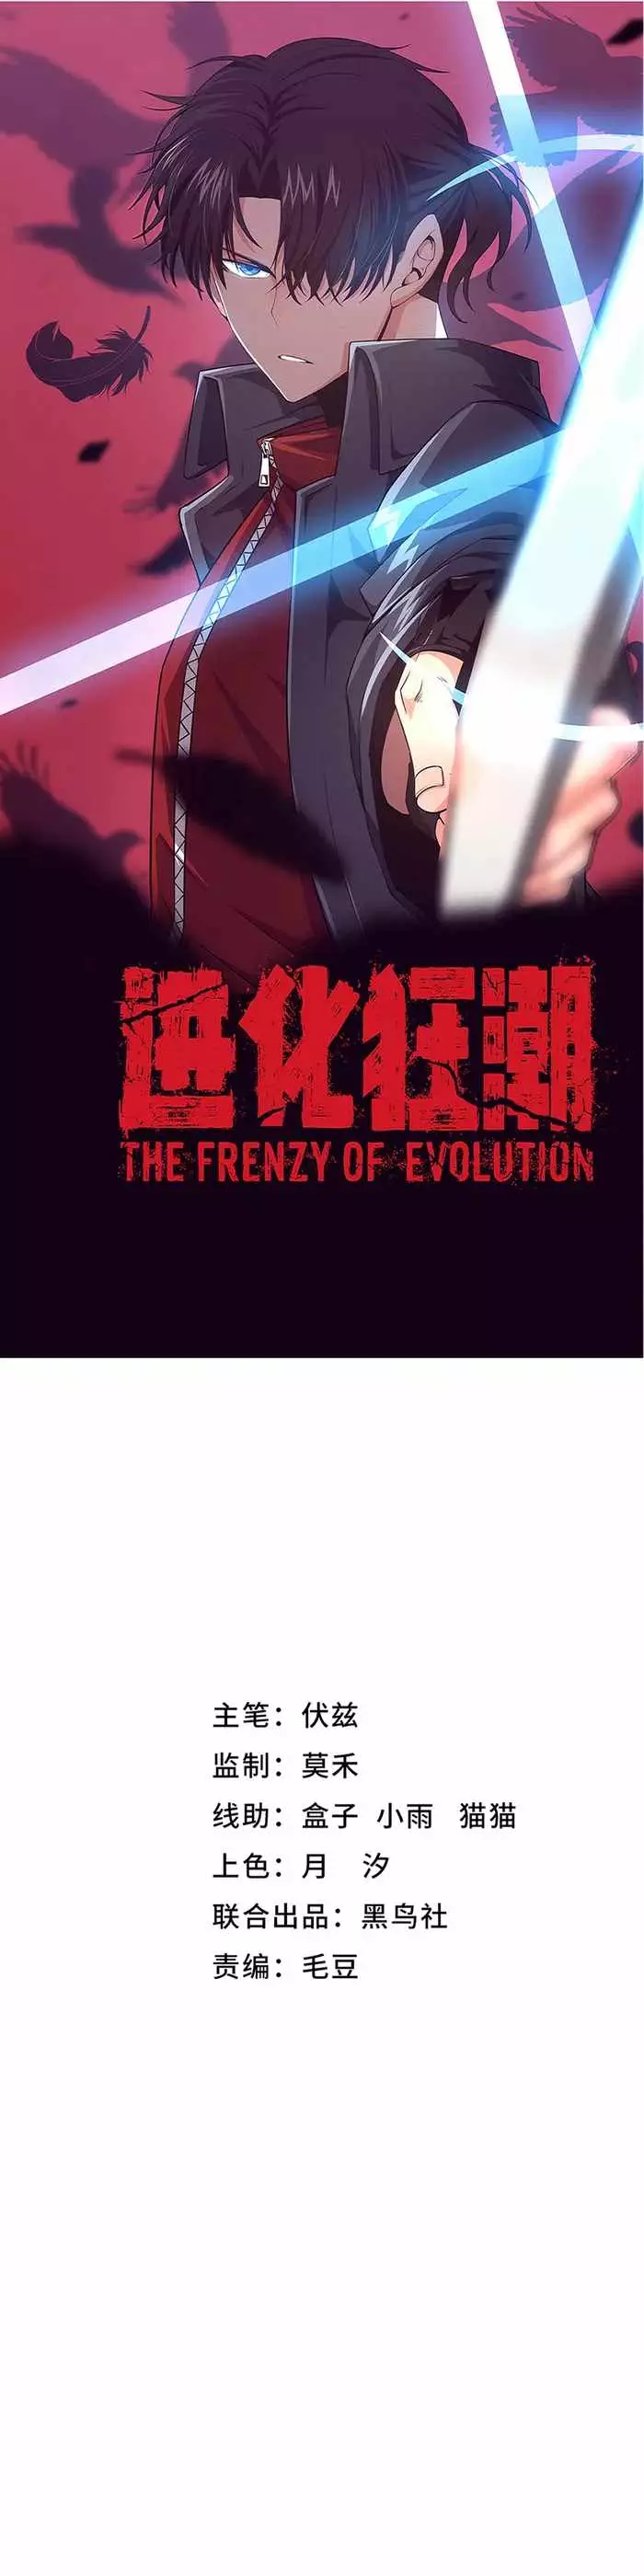 Evolution Frenzy - 142 page 4-1e695fed